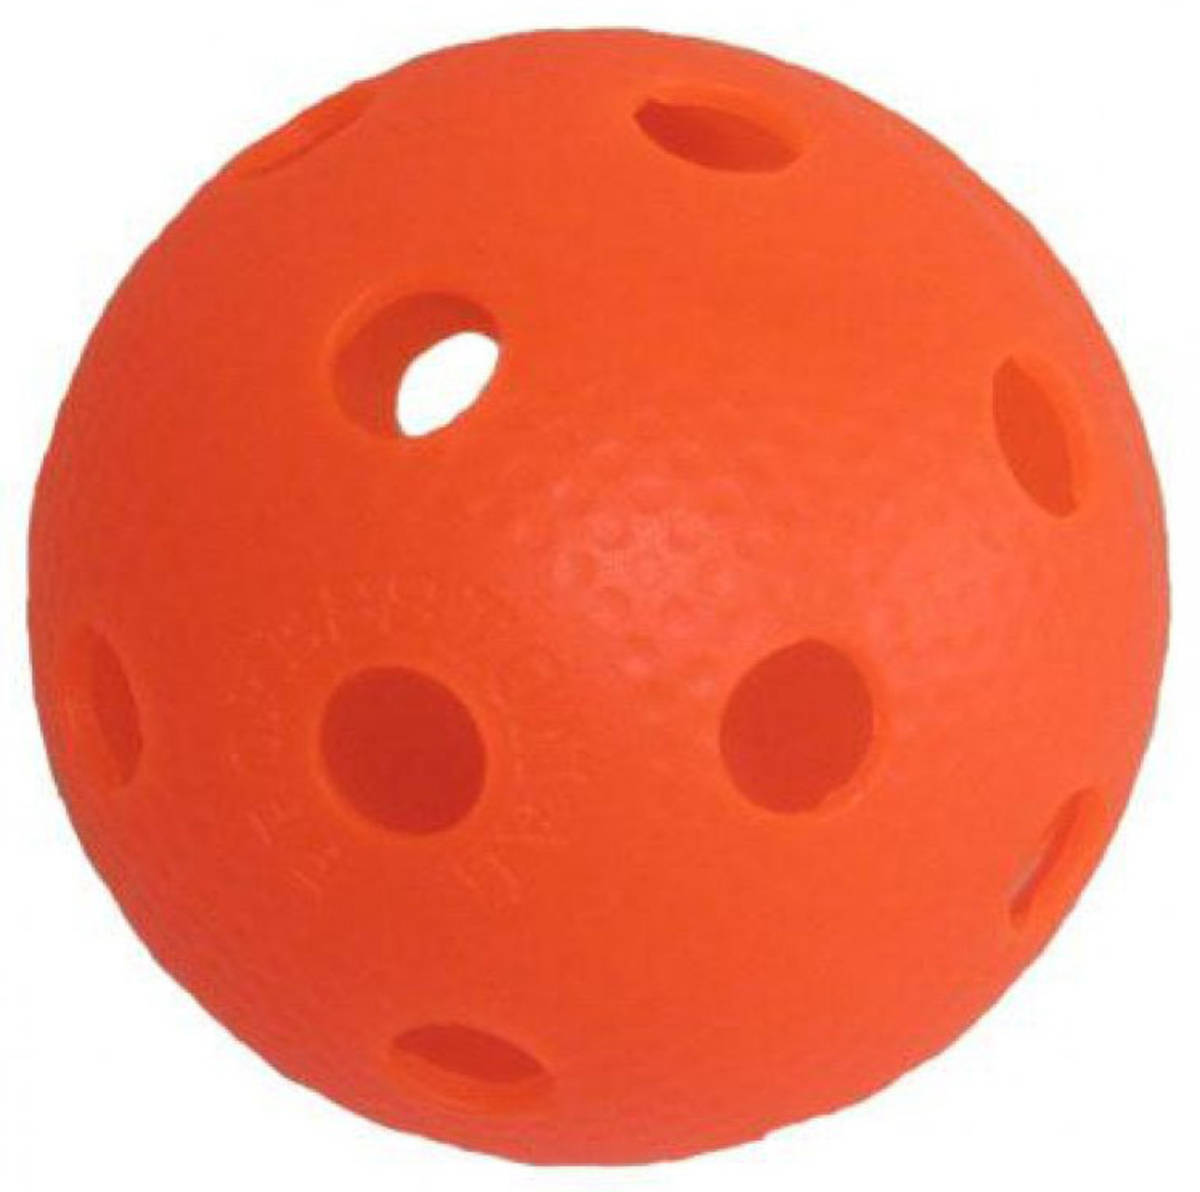 SEDCO Florbalový míček Profession oranžový certifikovaný Sport 2020